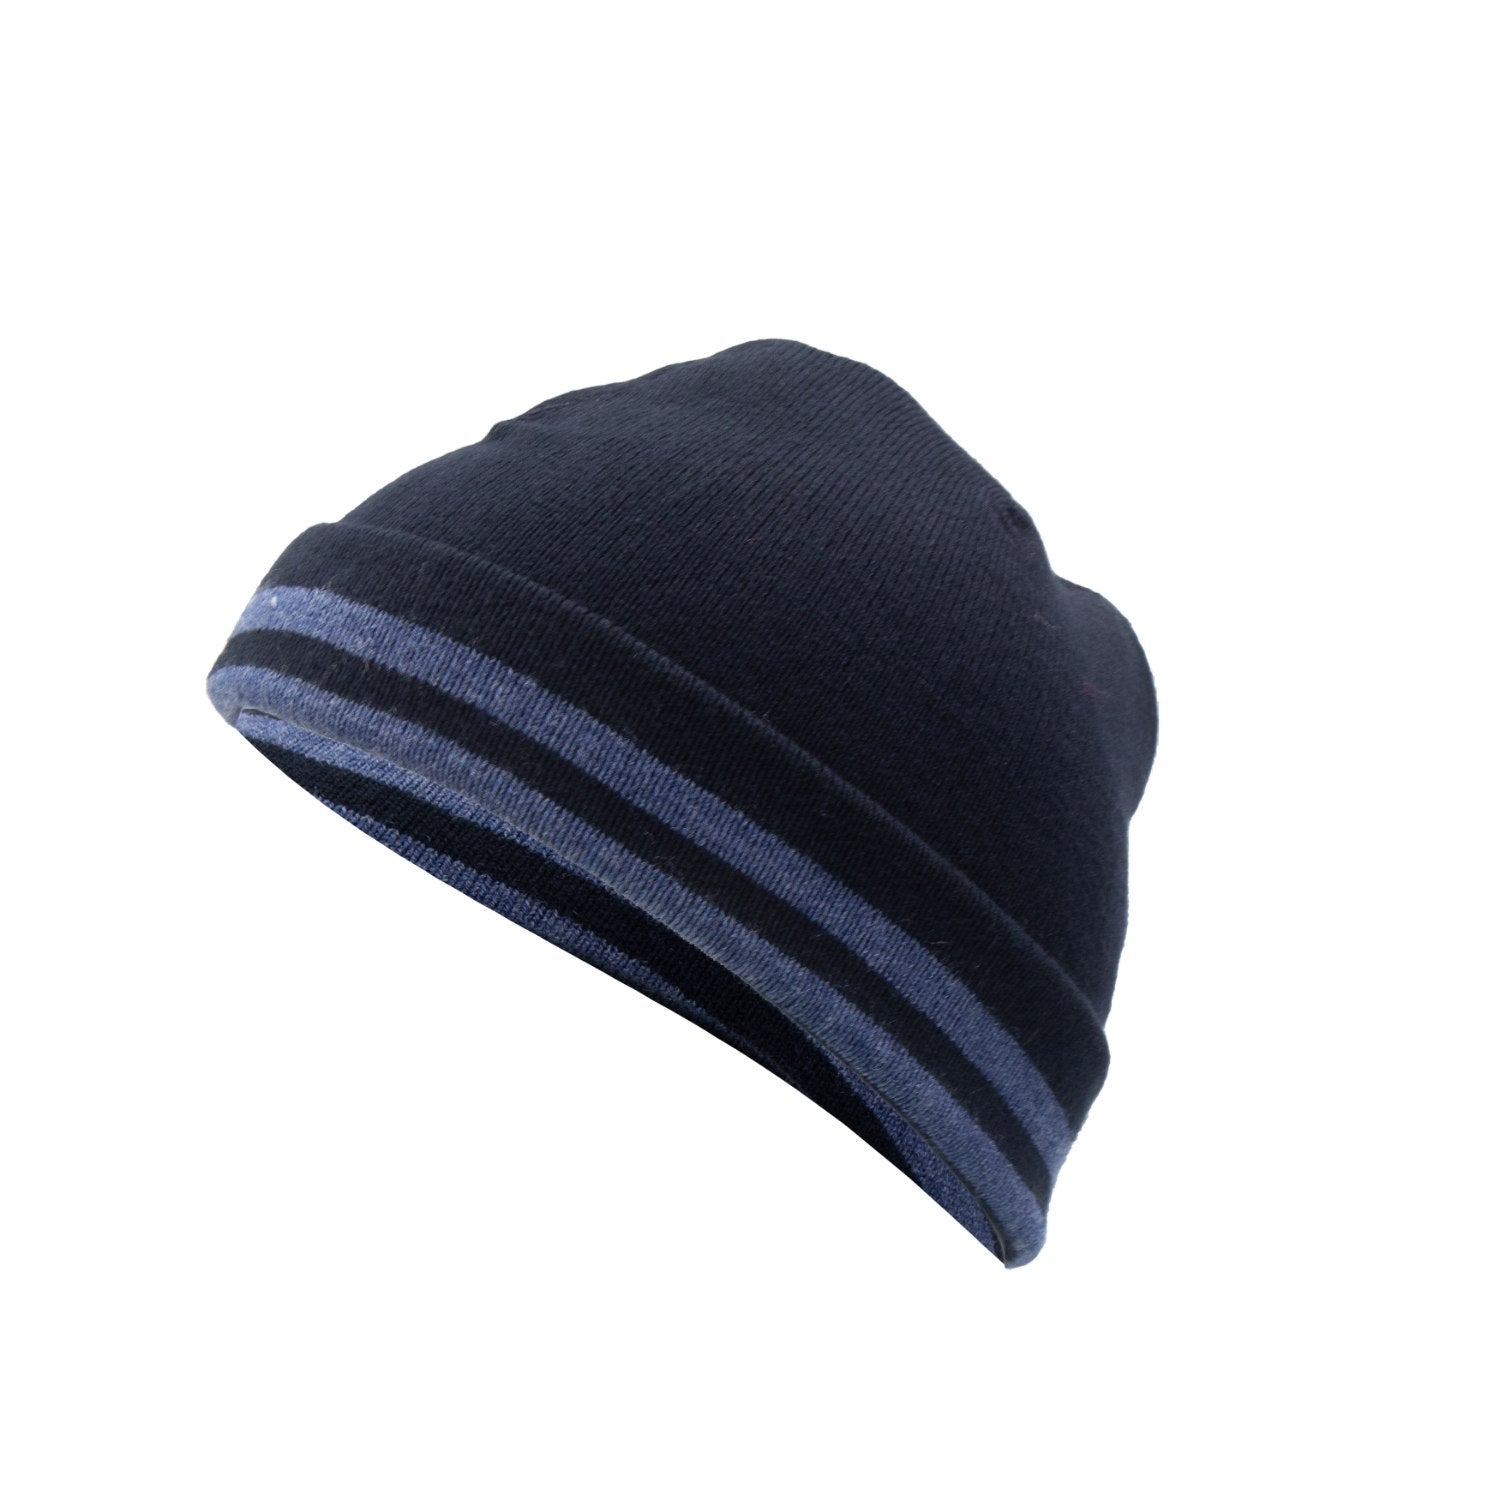 Buy Kaza Beanie Reversible Winter Cap Navy Blue at Gokyo Outdoor Clothing & Gear